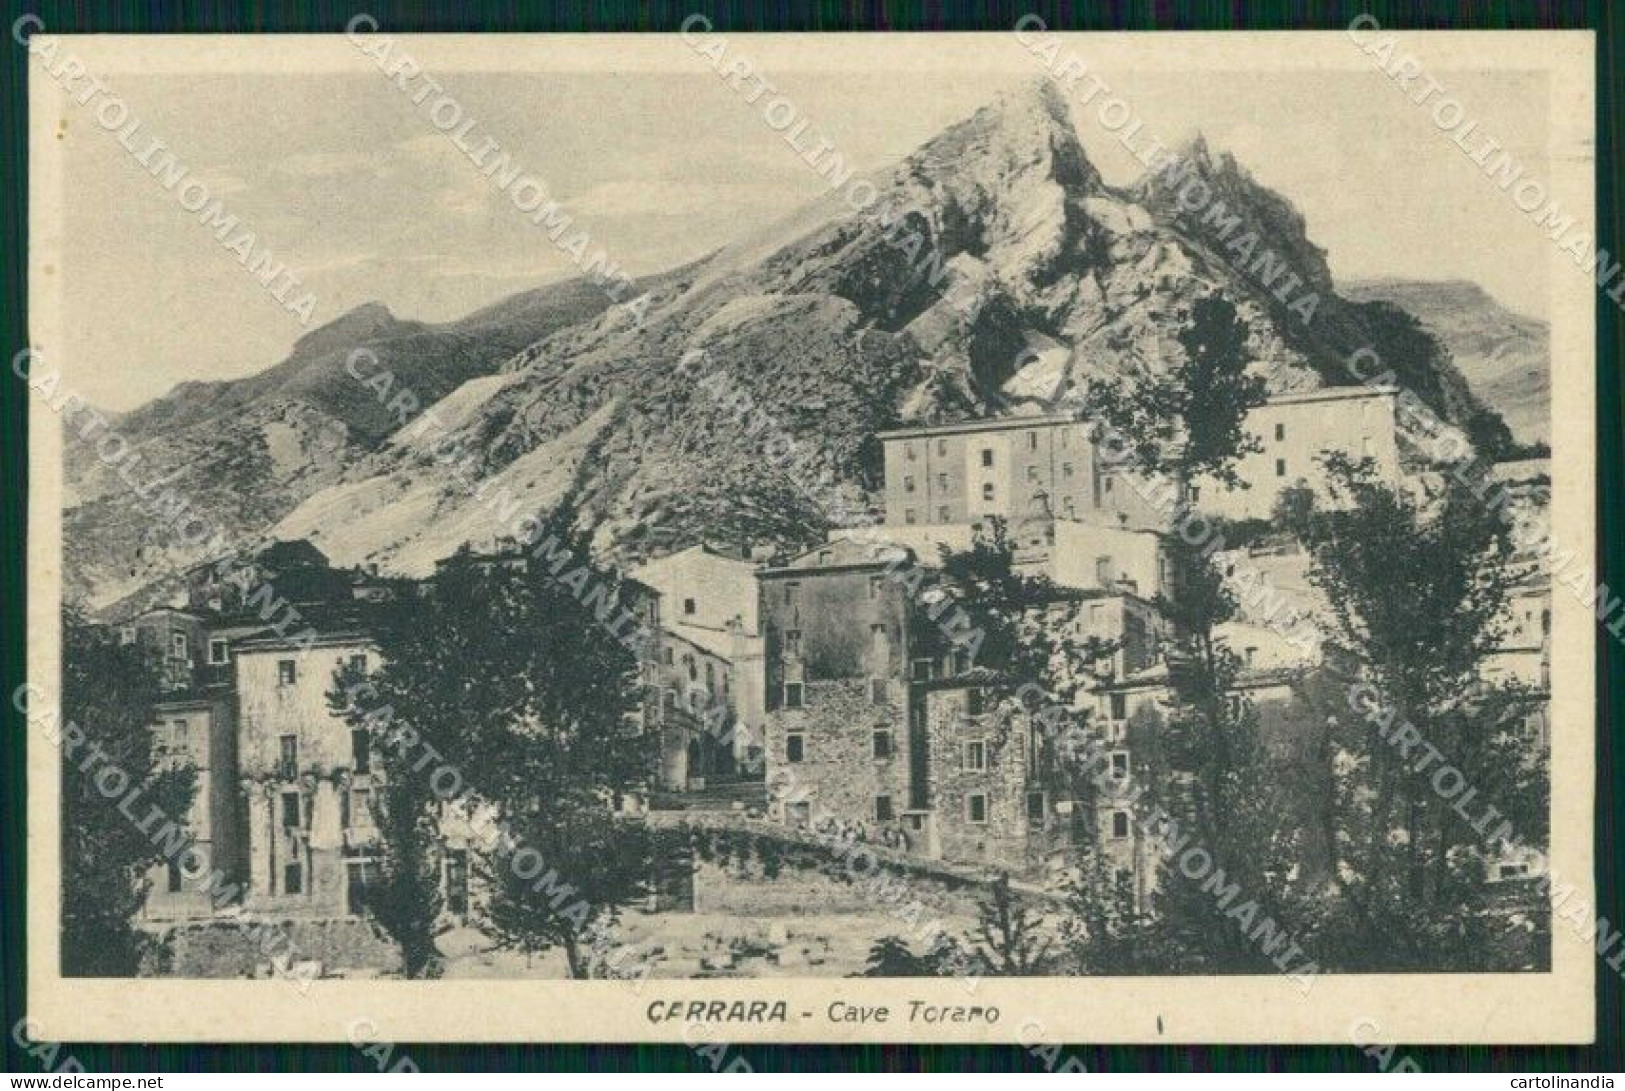 Massa Carrara Cave Torano Cartolina RB6909 - Massa